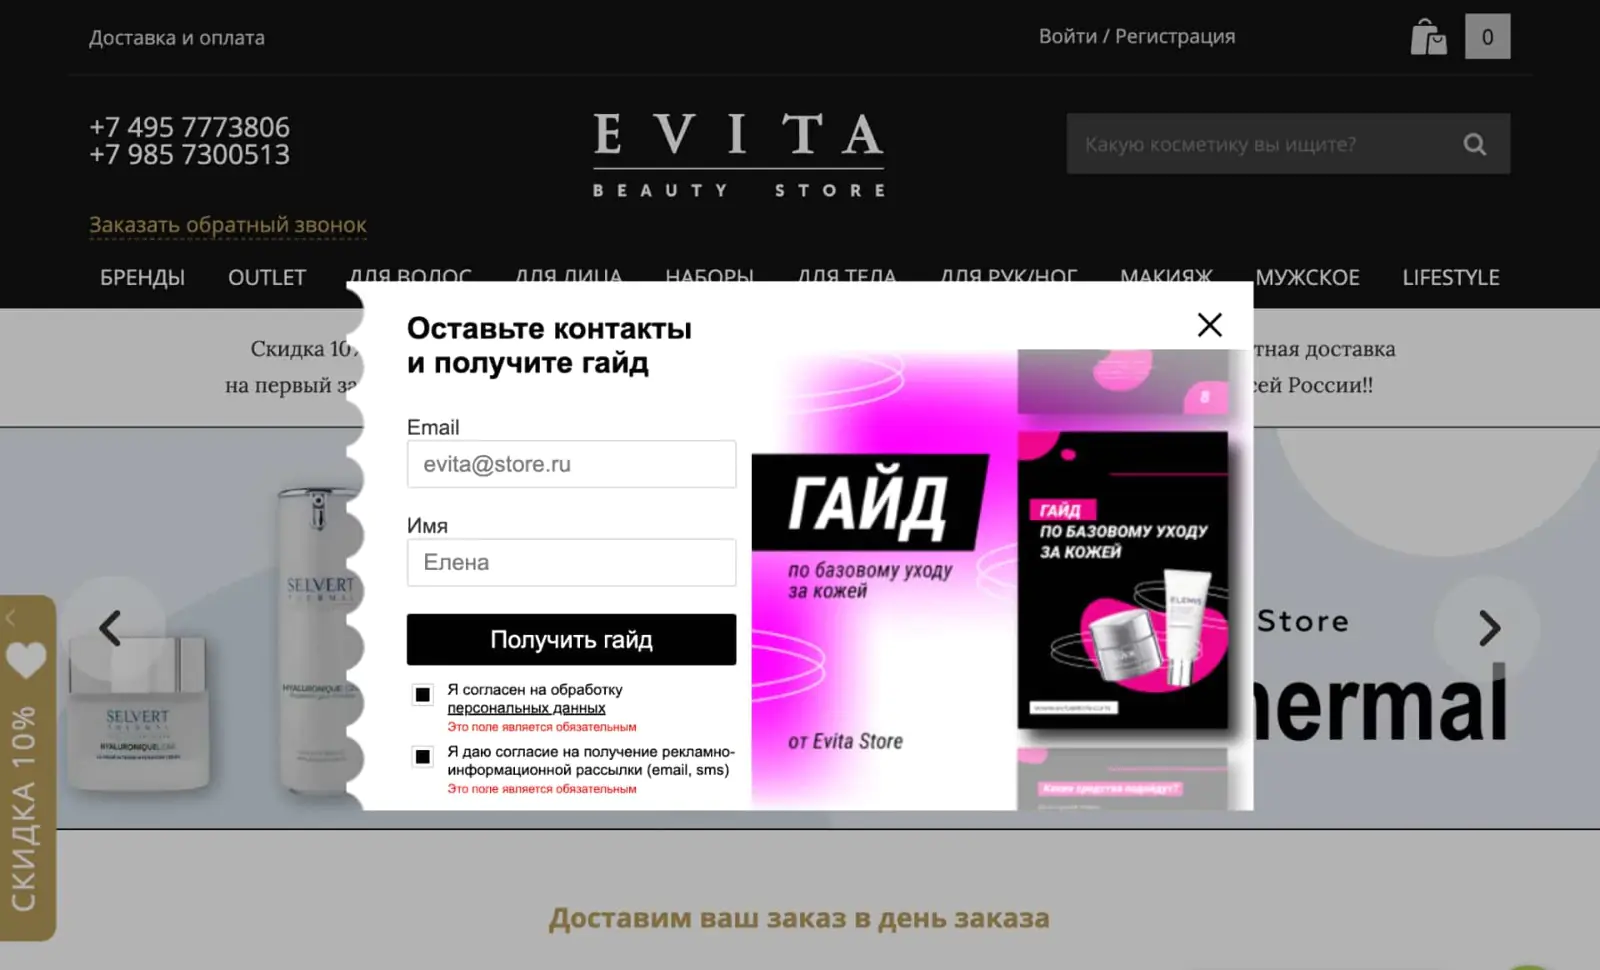 Evita Store обменивает гид по уходу за кожей на имя и email